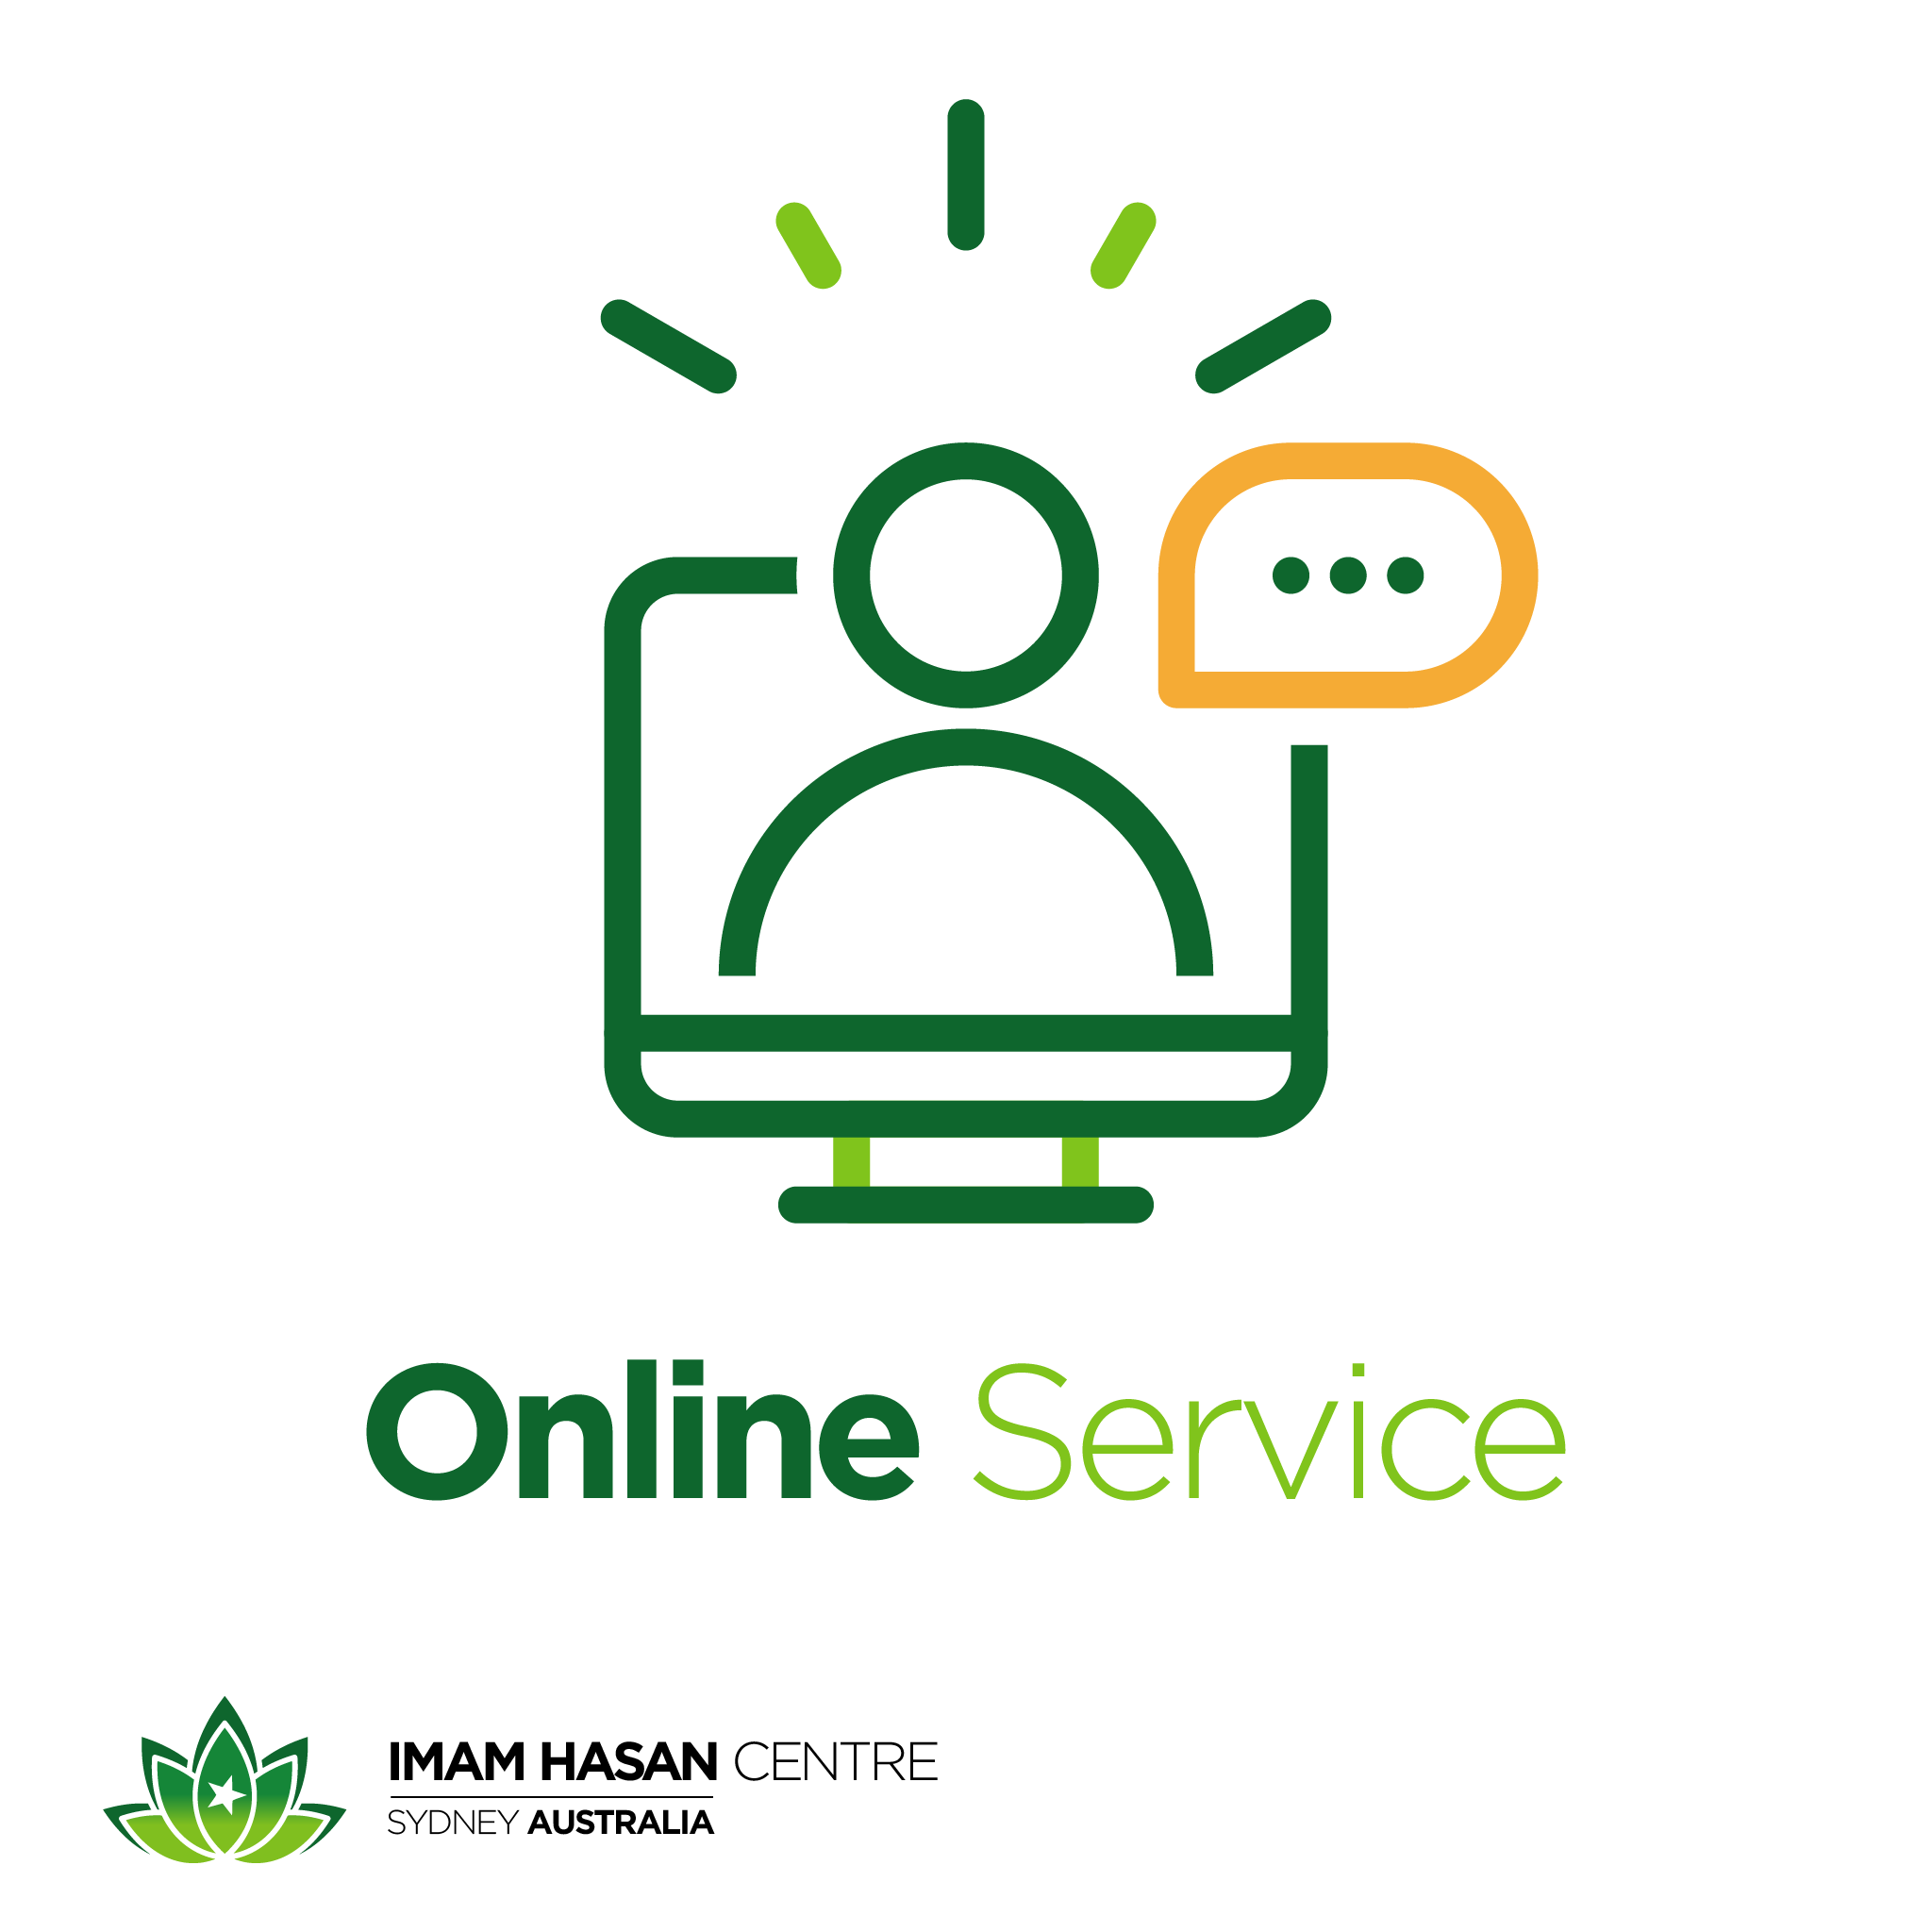 Shabaan 1441 – Online Service – Effective immediately